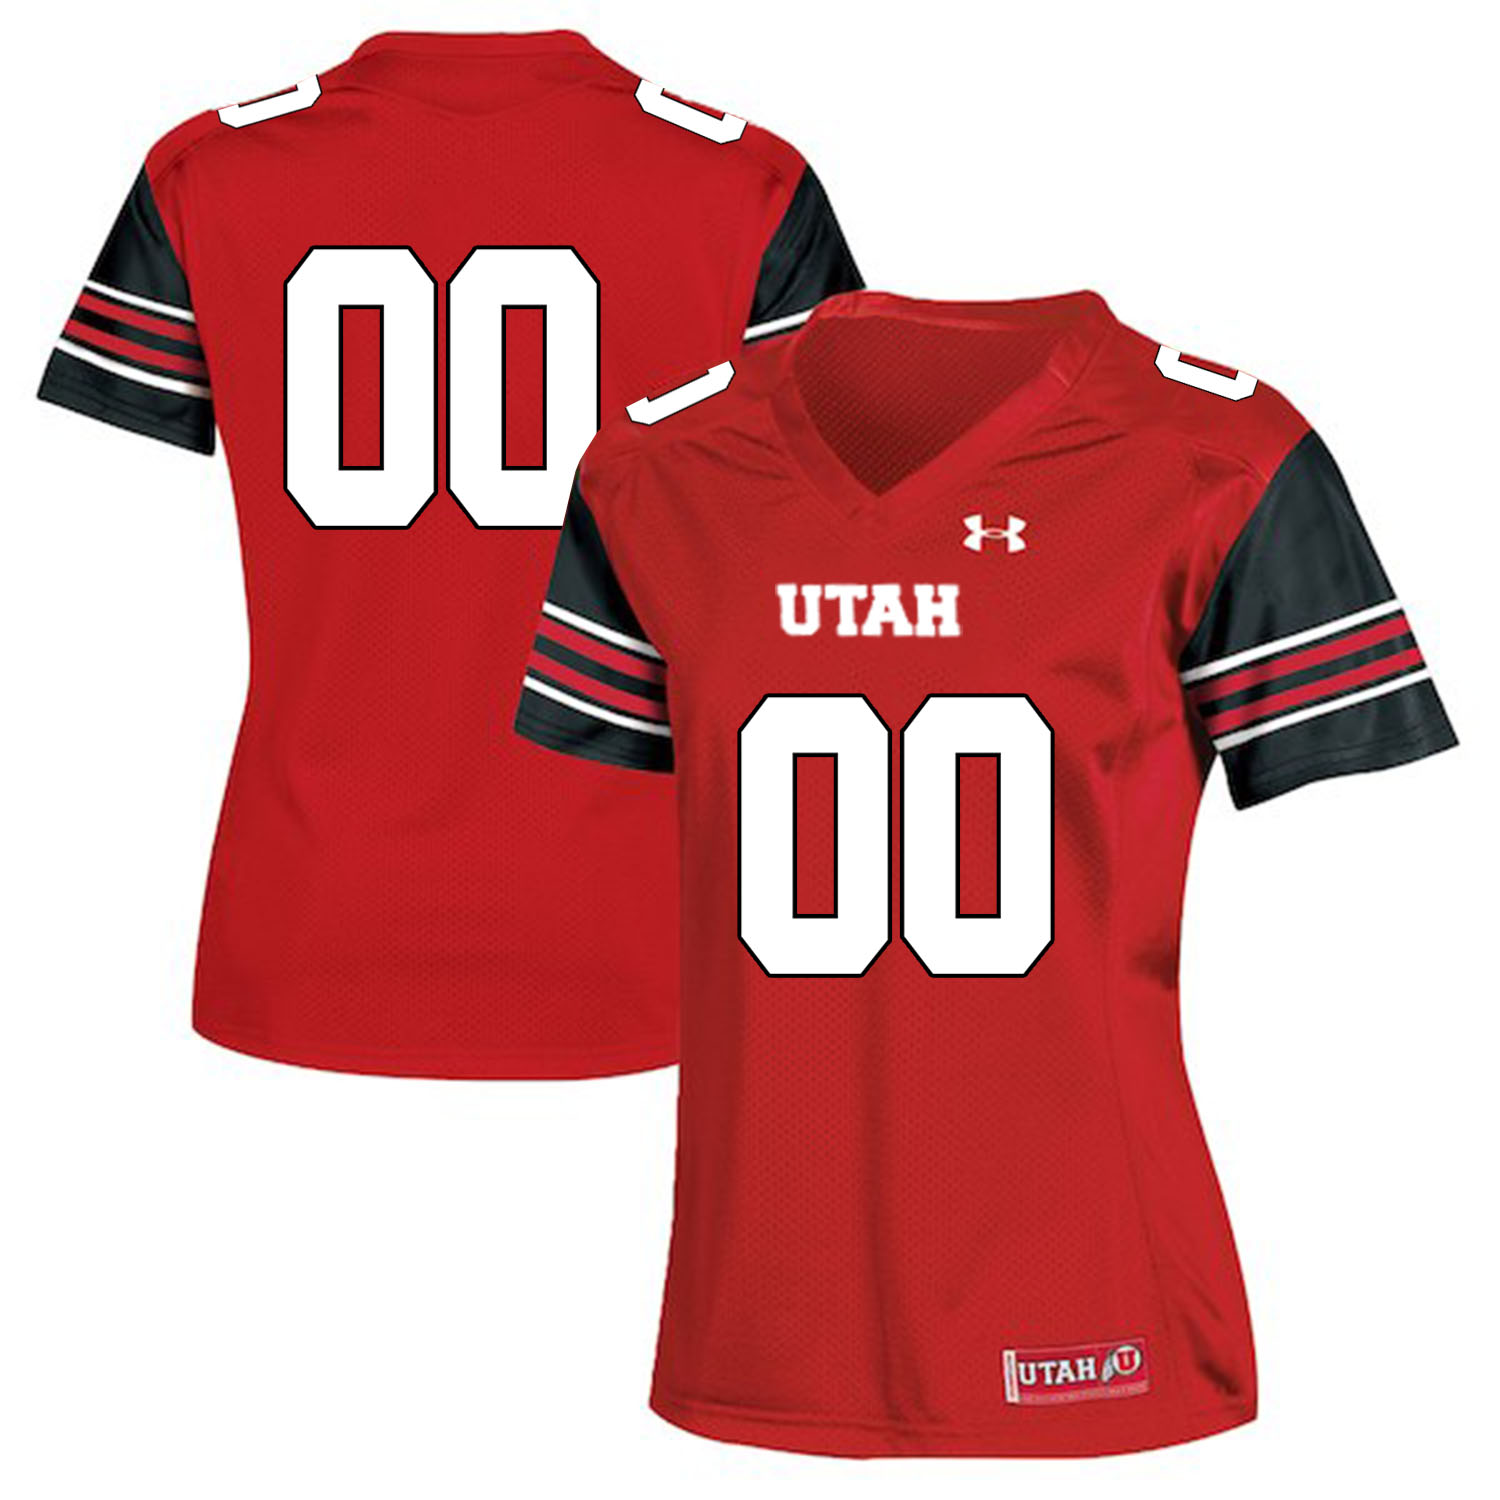 Utah Utes Red Women's Customized College Football Jersey